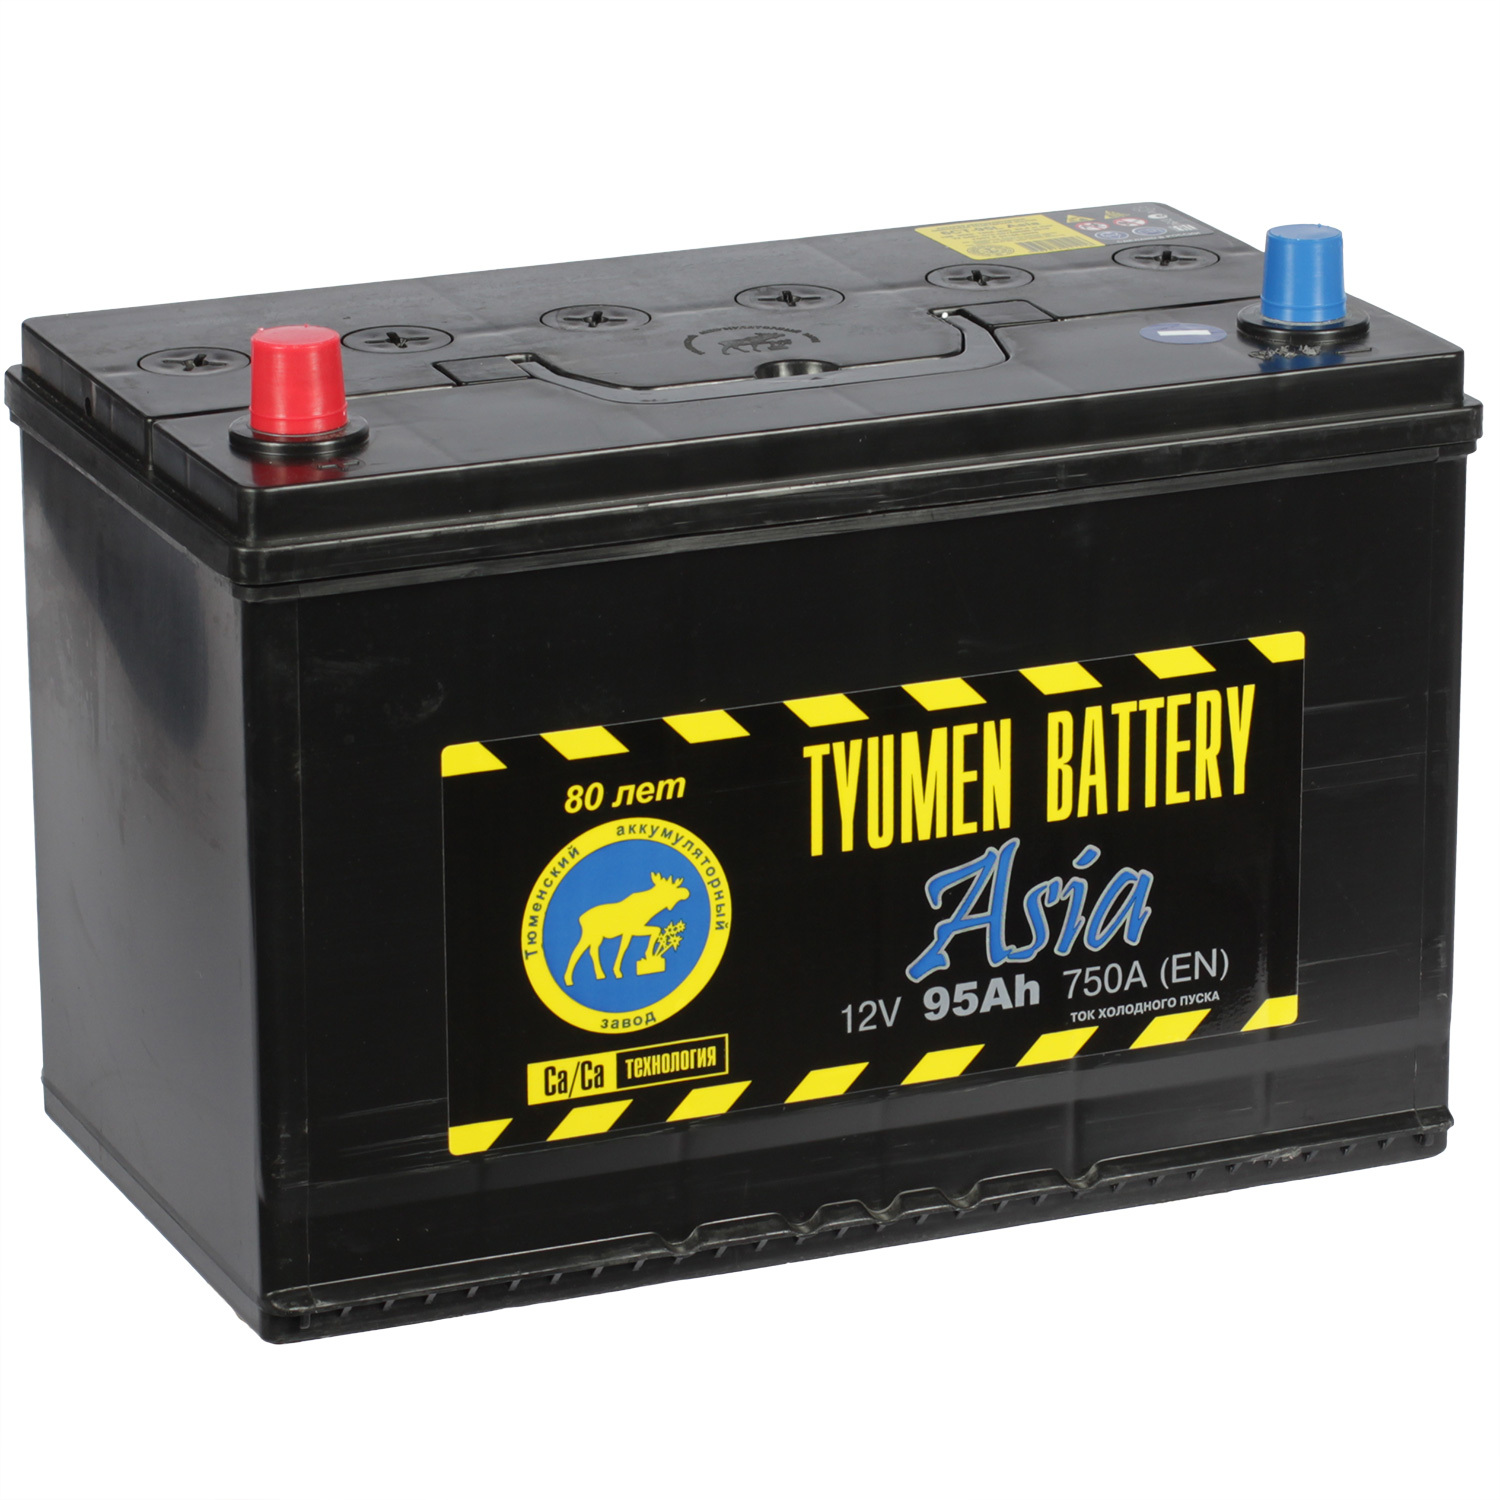 Tyumen Battery Автомобильный аккумулятор Tyumen Battery 95 Ач прямая полярность D31R tyumen battery автомобильный аккумулятор tyumen battery 61 ач прямая полярность lb2